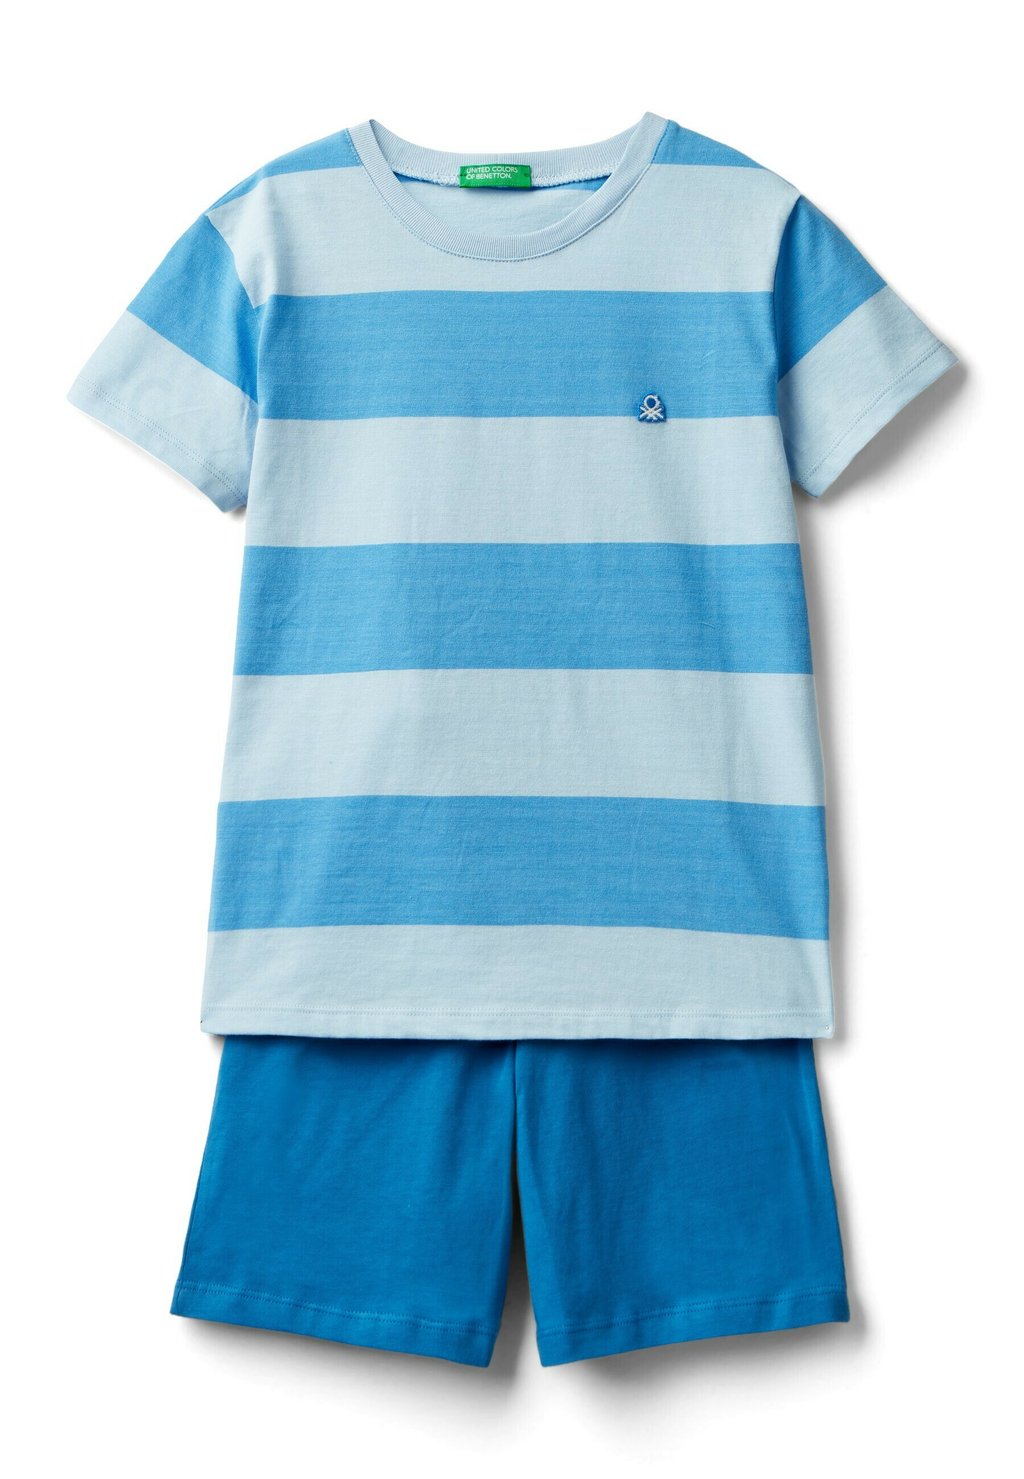 Пижама SET United Colors of Benetton, разноцветный пижама set logo transfert detail on shi united colors of benetton цвет grey